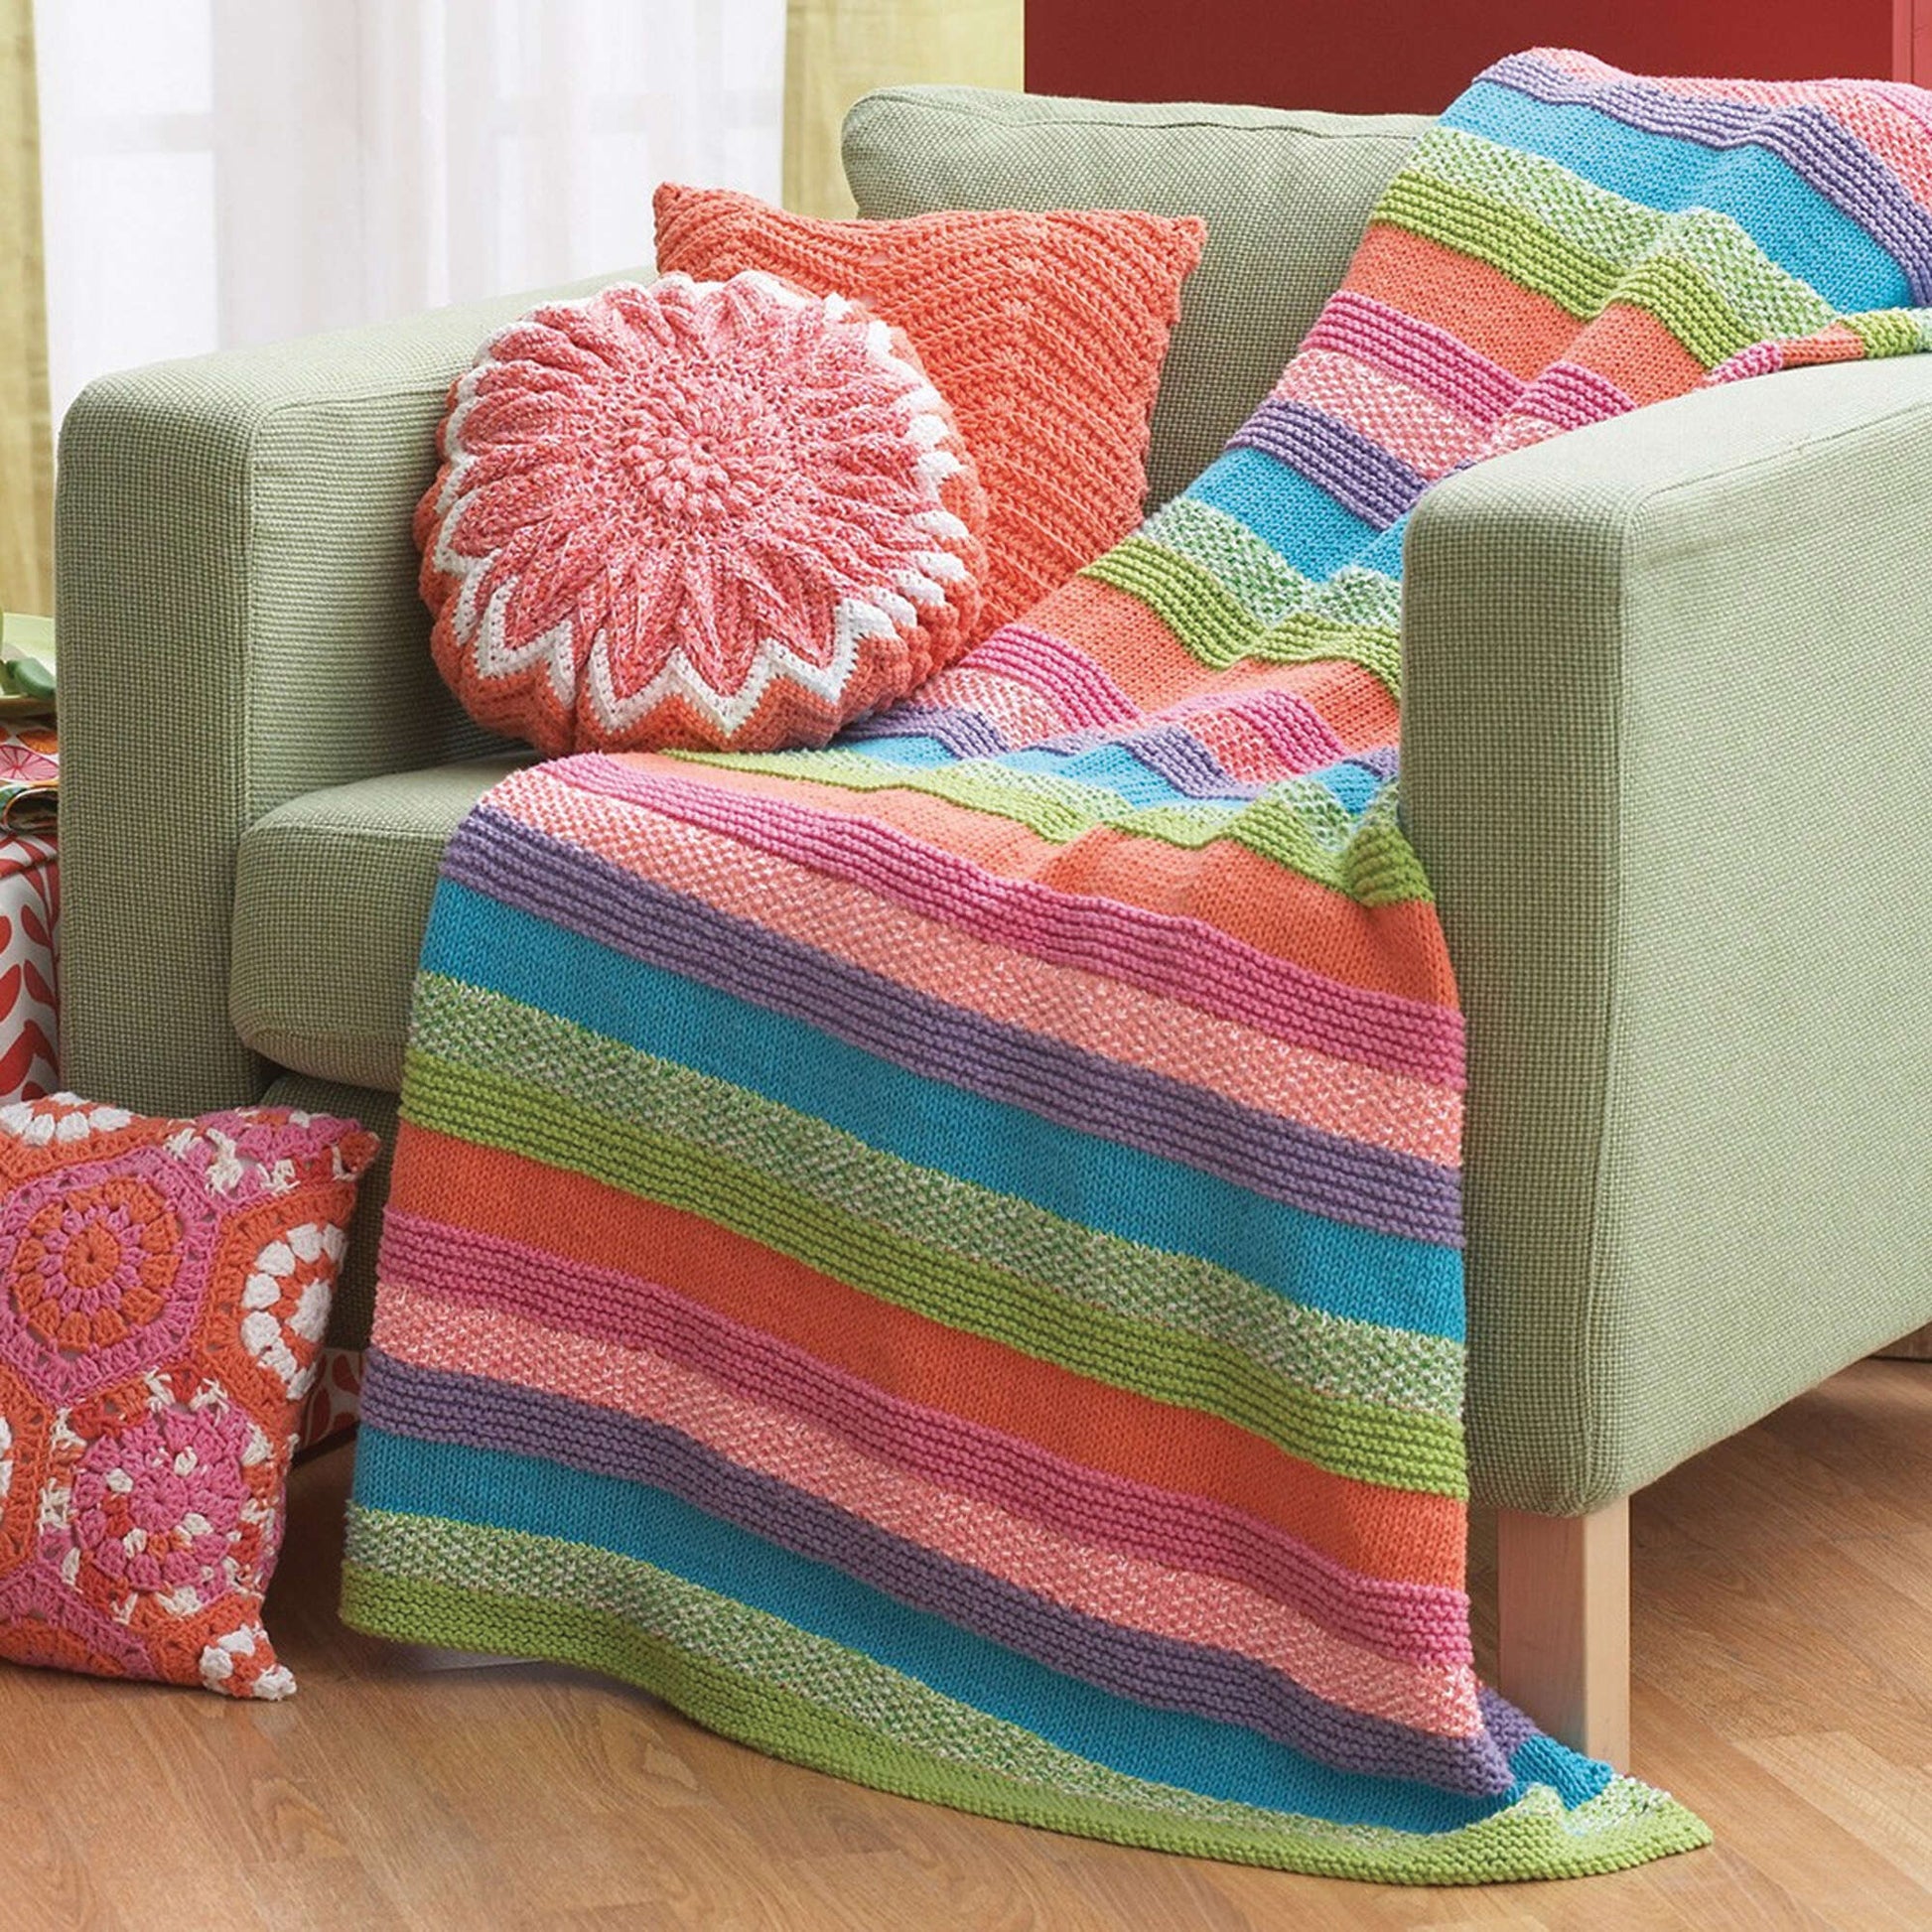 Lily Sugar 'n Cream Striped Knit Blanket Pattern | Yarnspirations